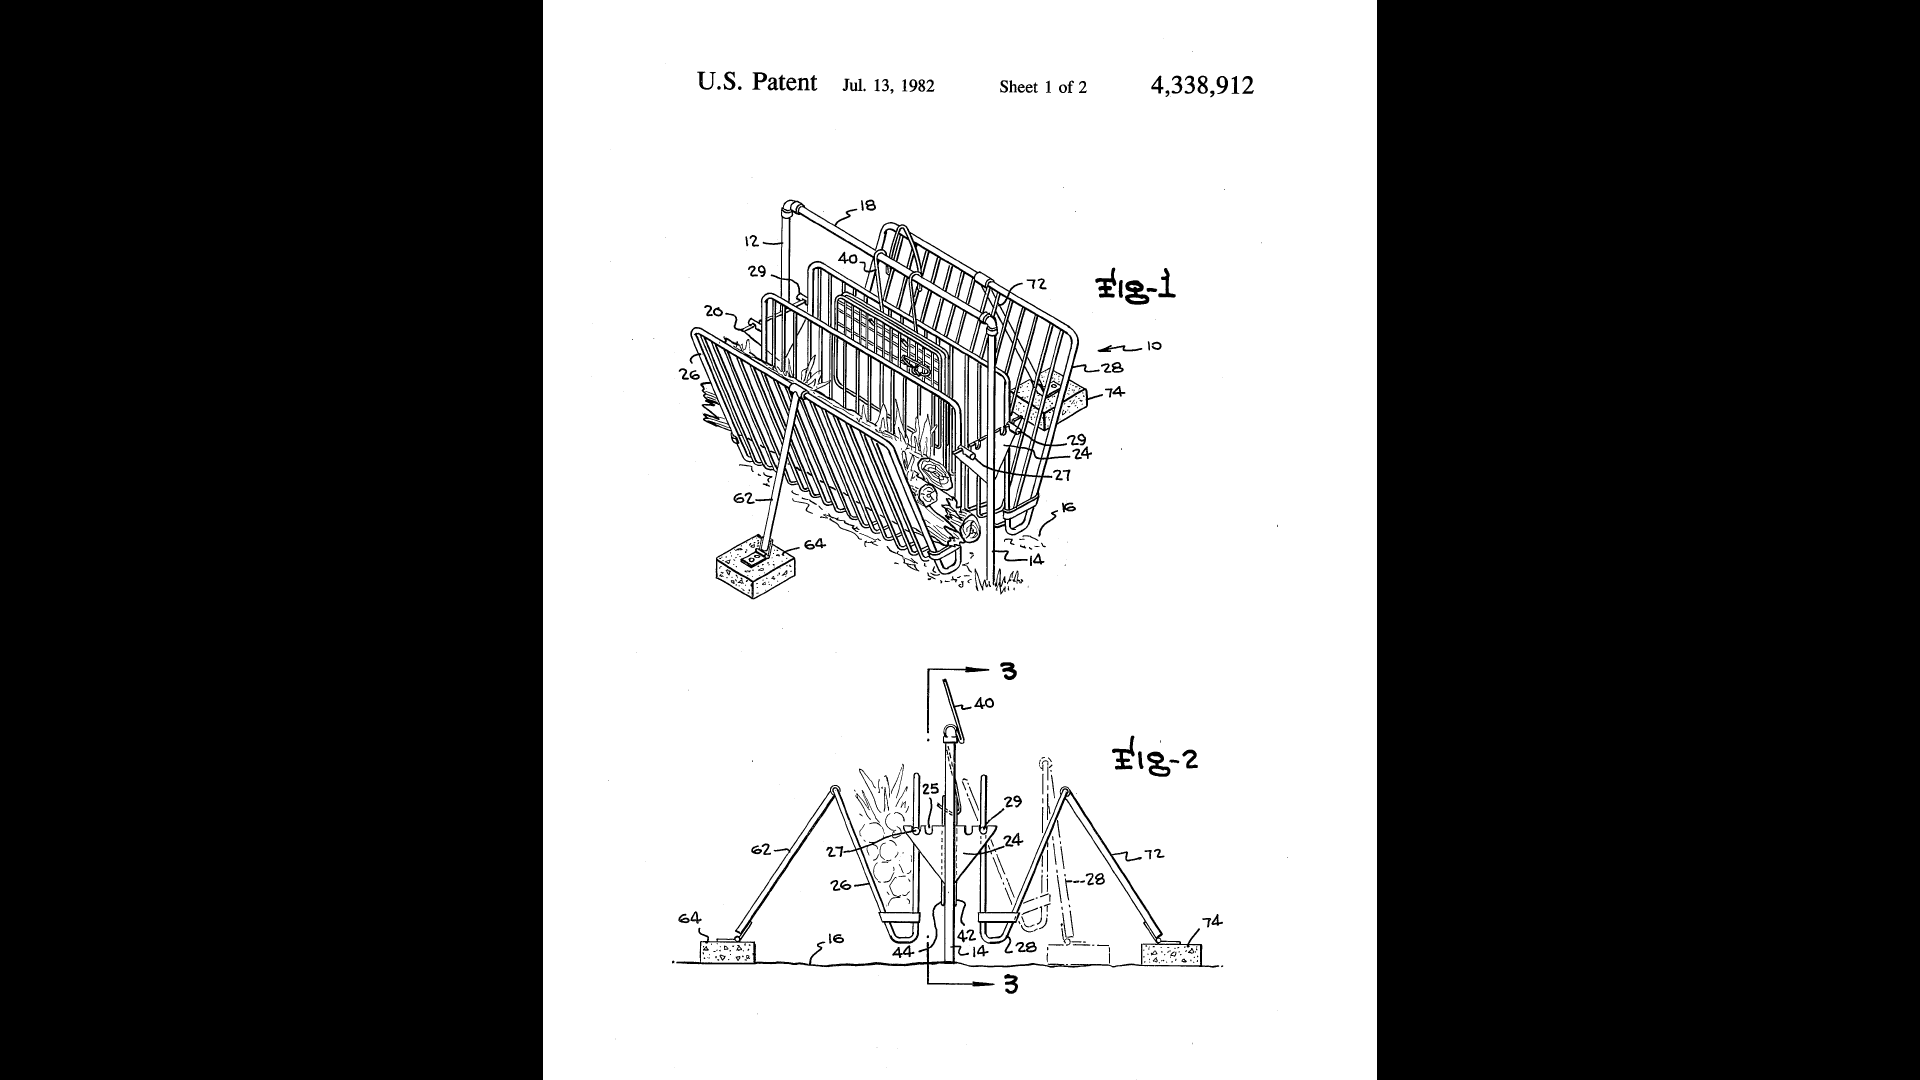 Tom Gaskins Patent No. 4,338,912